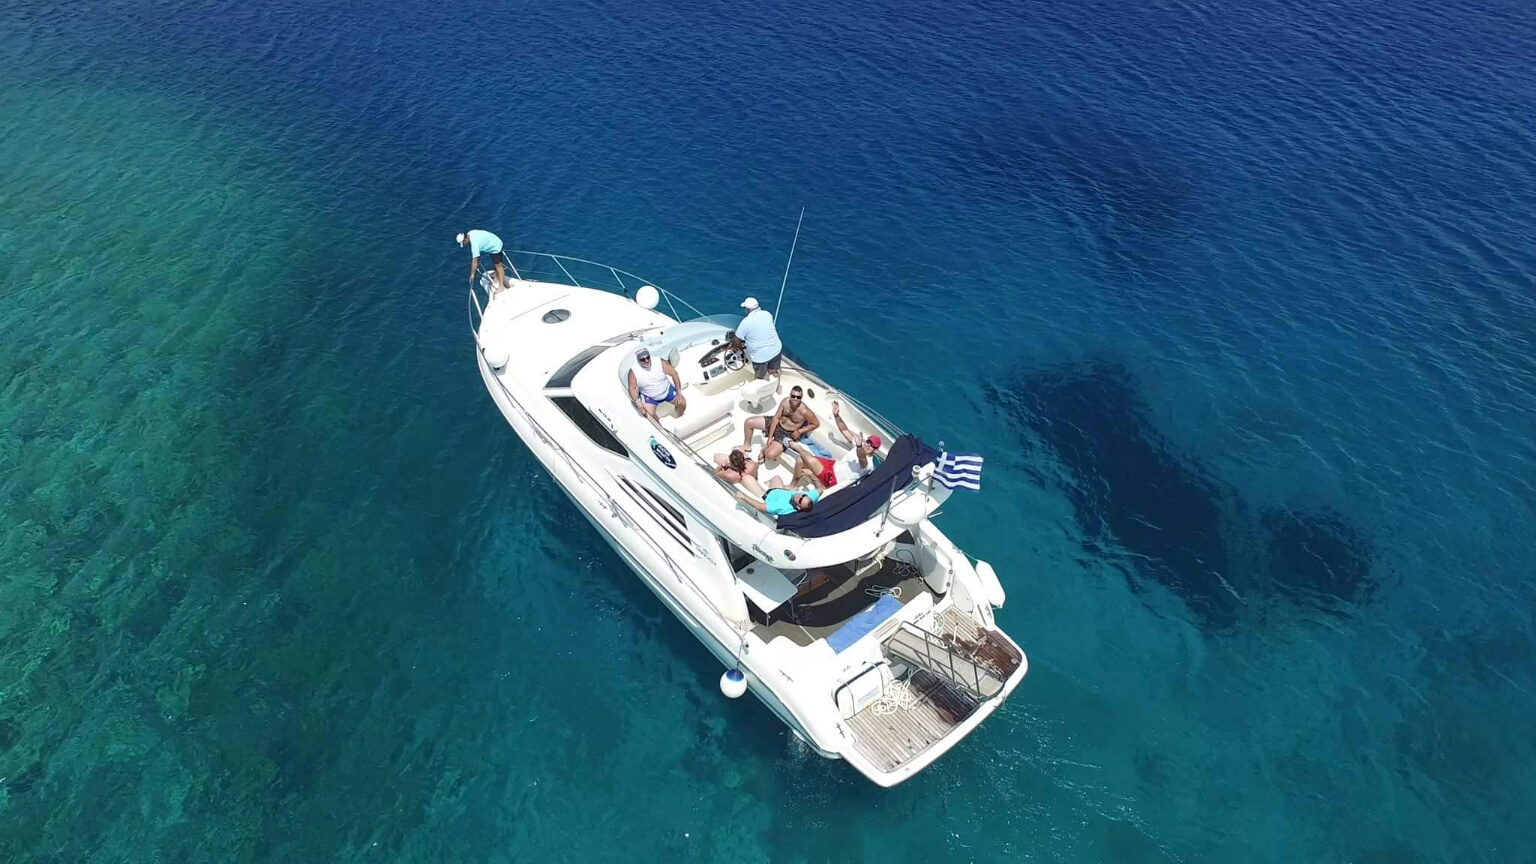 Mykonos Yachting